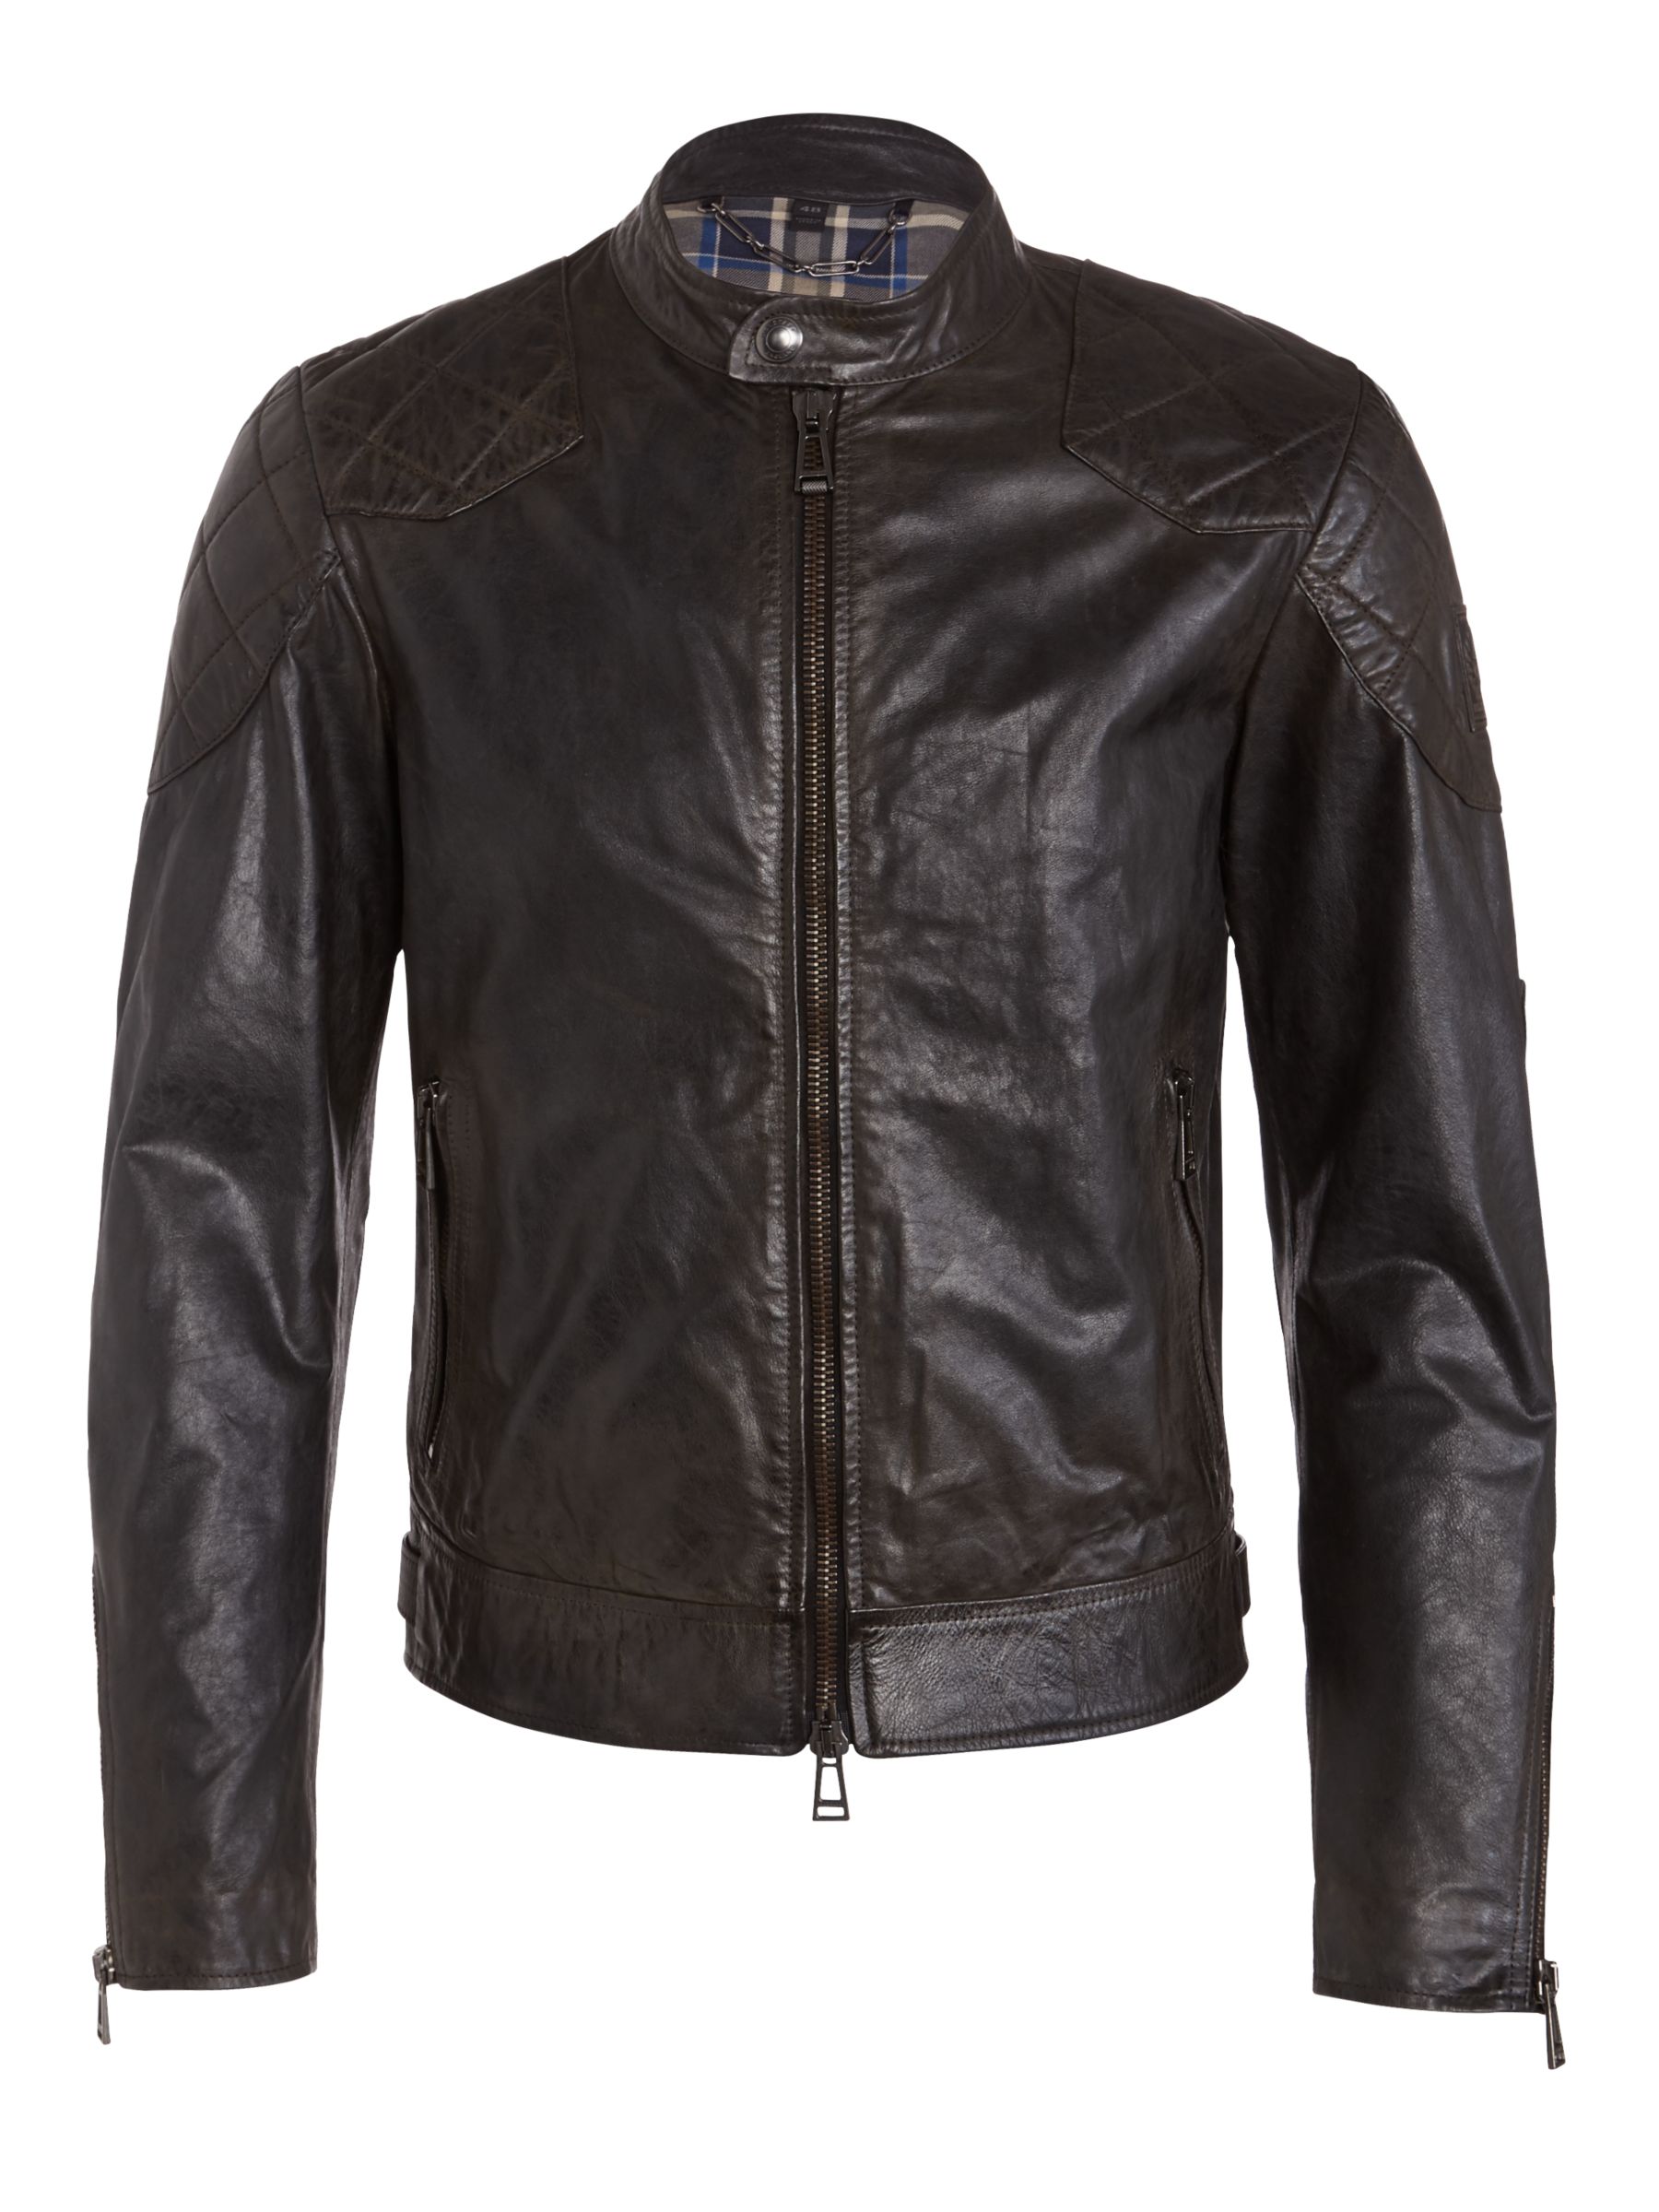 Belstaff Outlaw Leather Jacket, Black at John Lewis & Partners